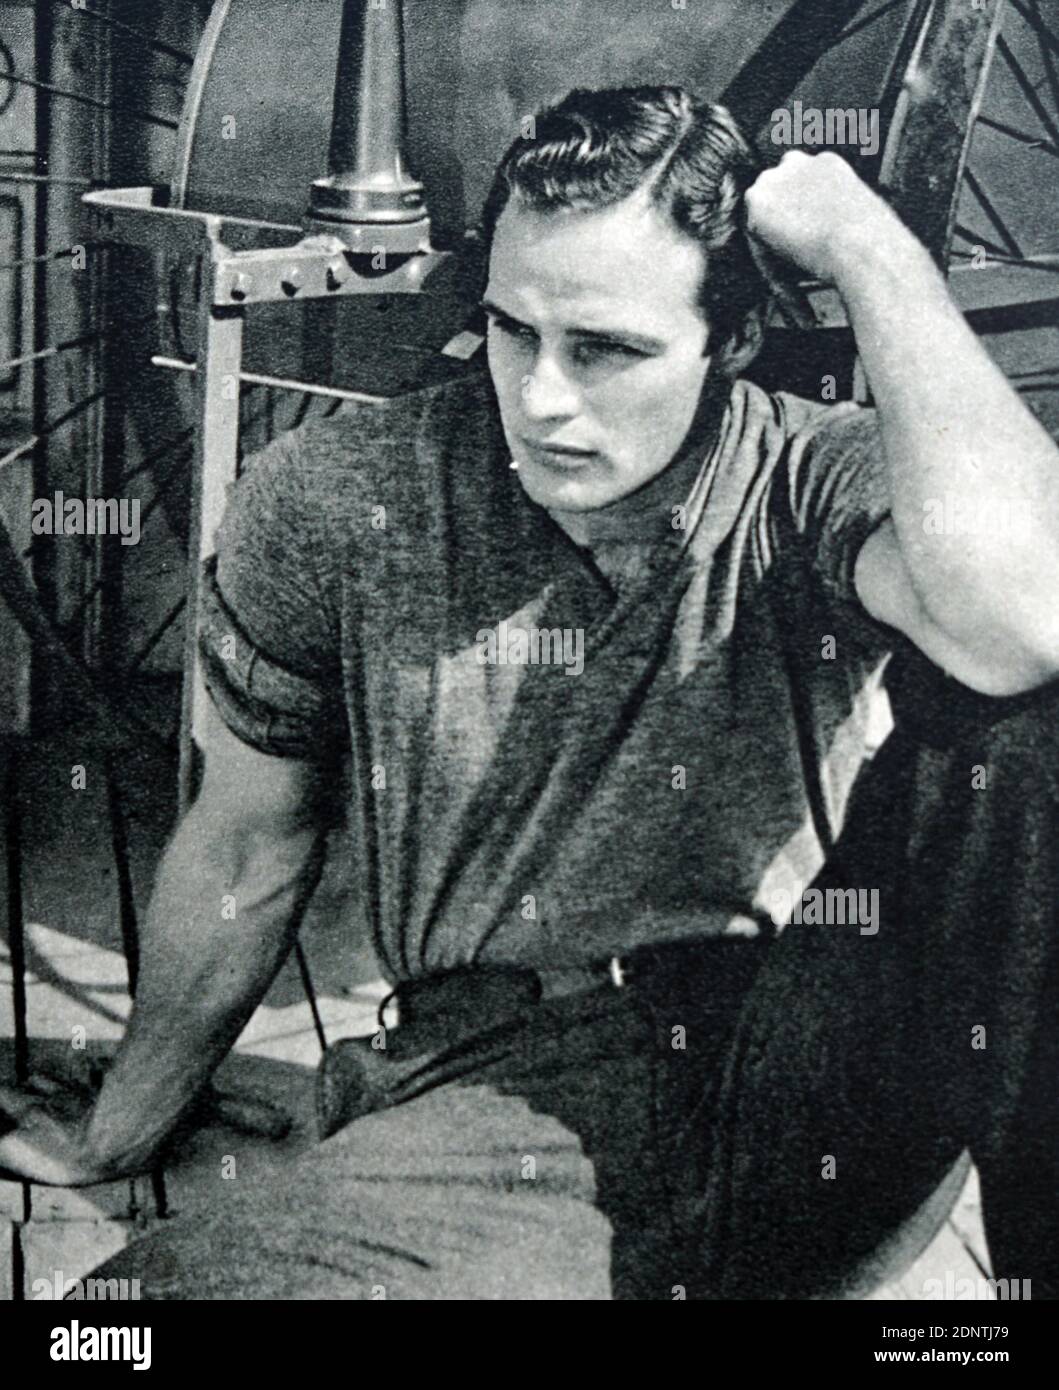 Photograph of Marlon Brando (1924-2004) an American actor and film director. Stock Photo